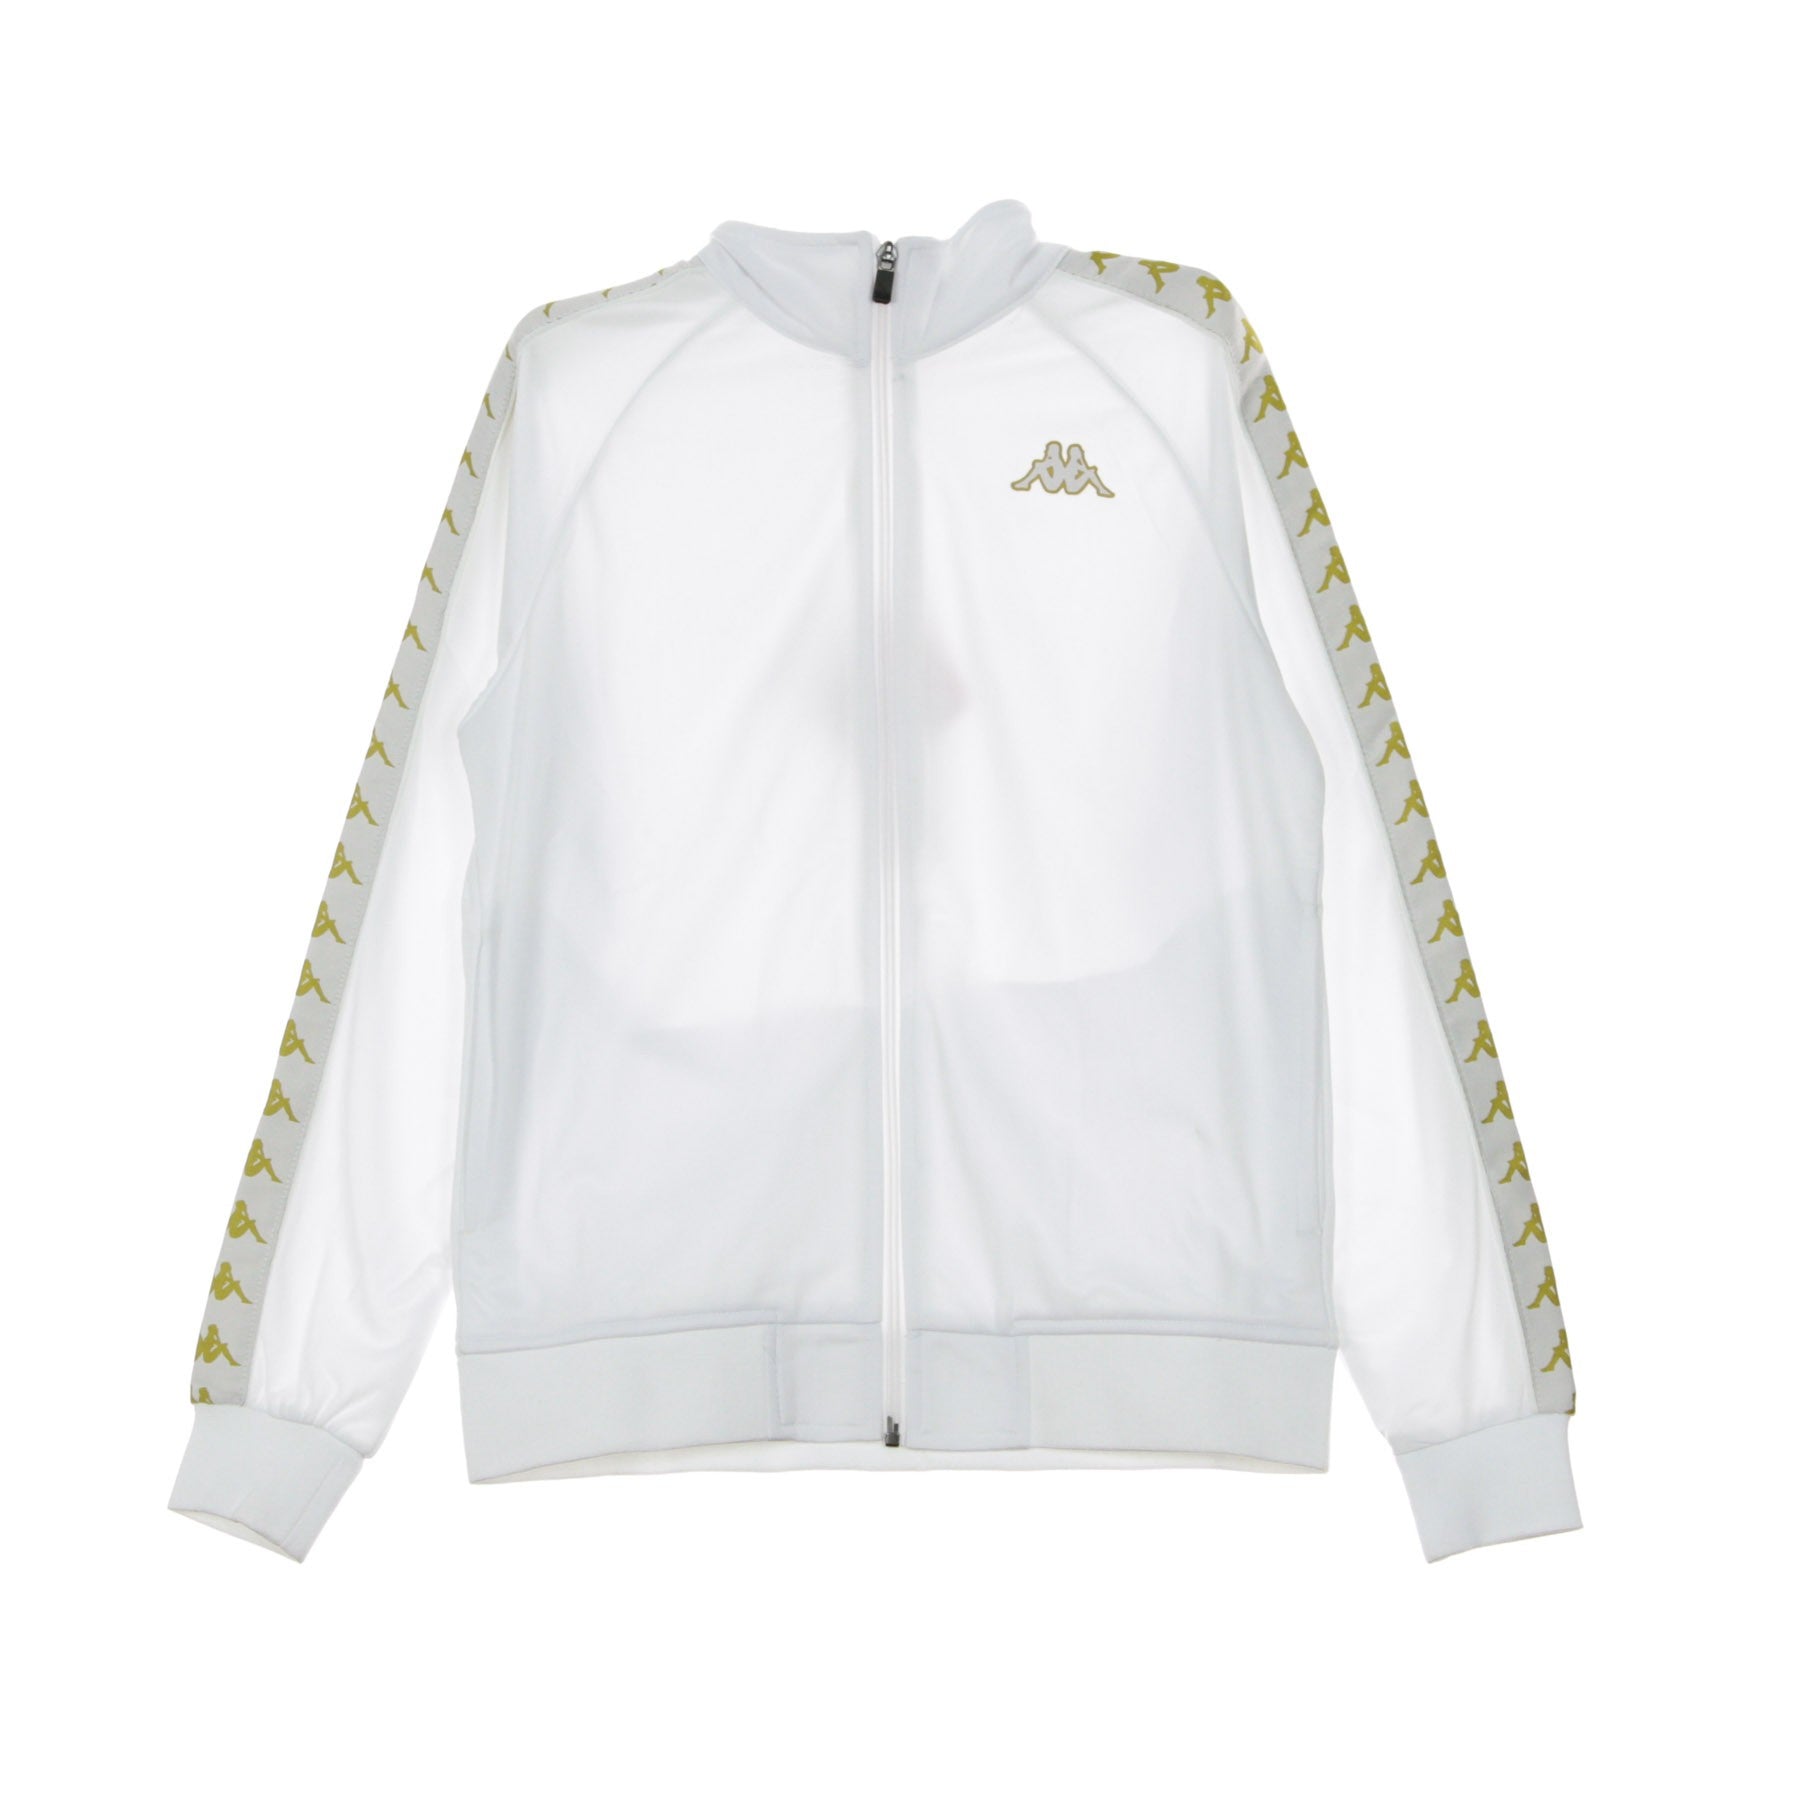 Anniston Slim Men's Track Jacket White/gold